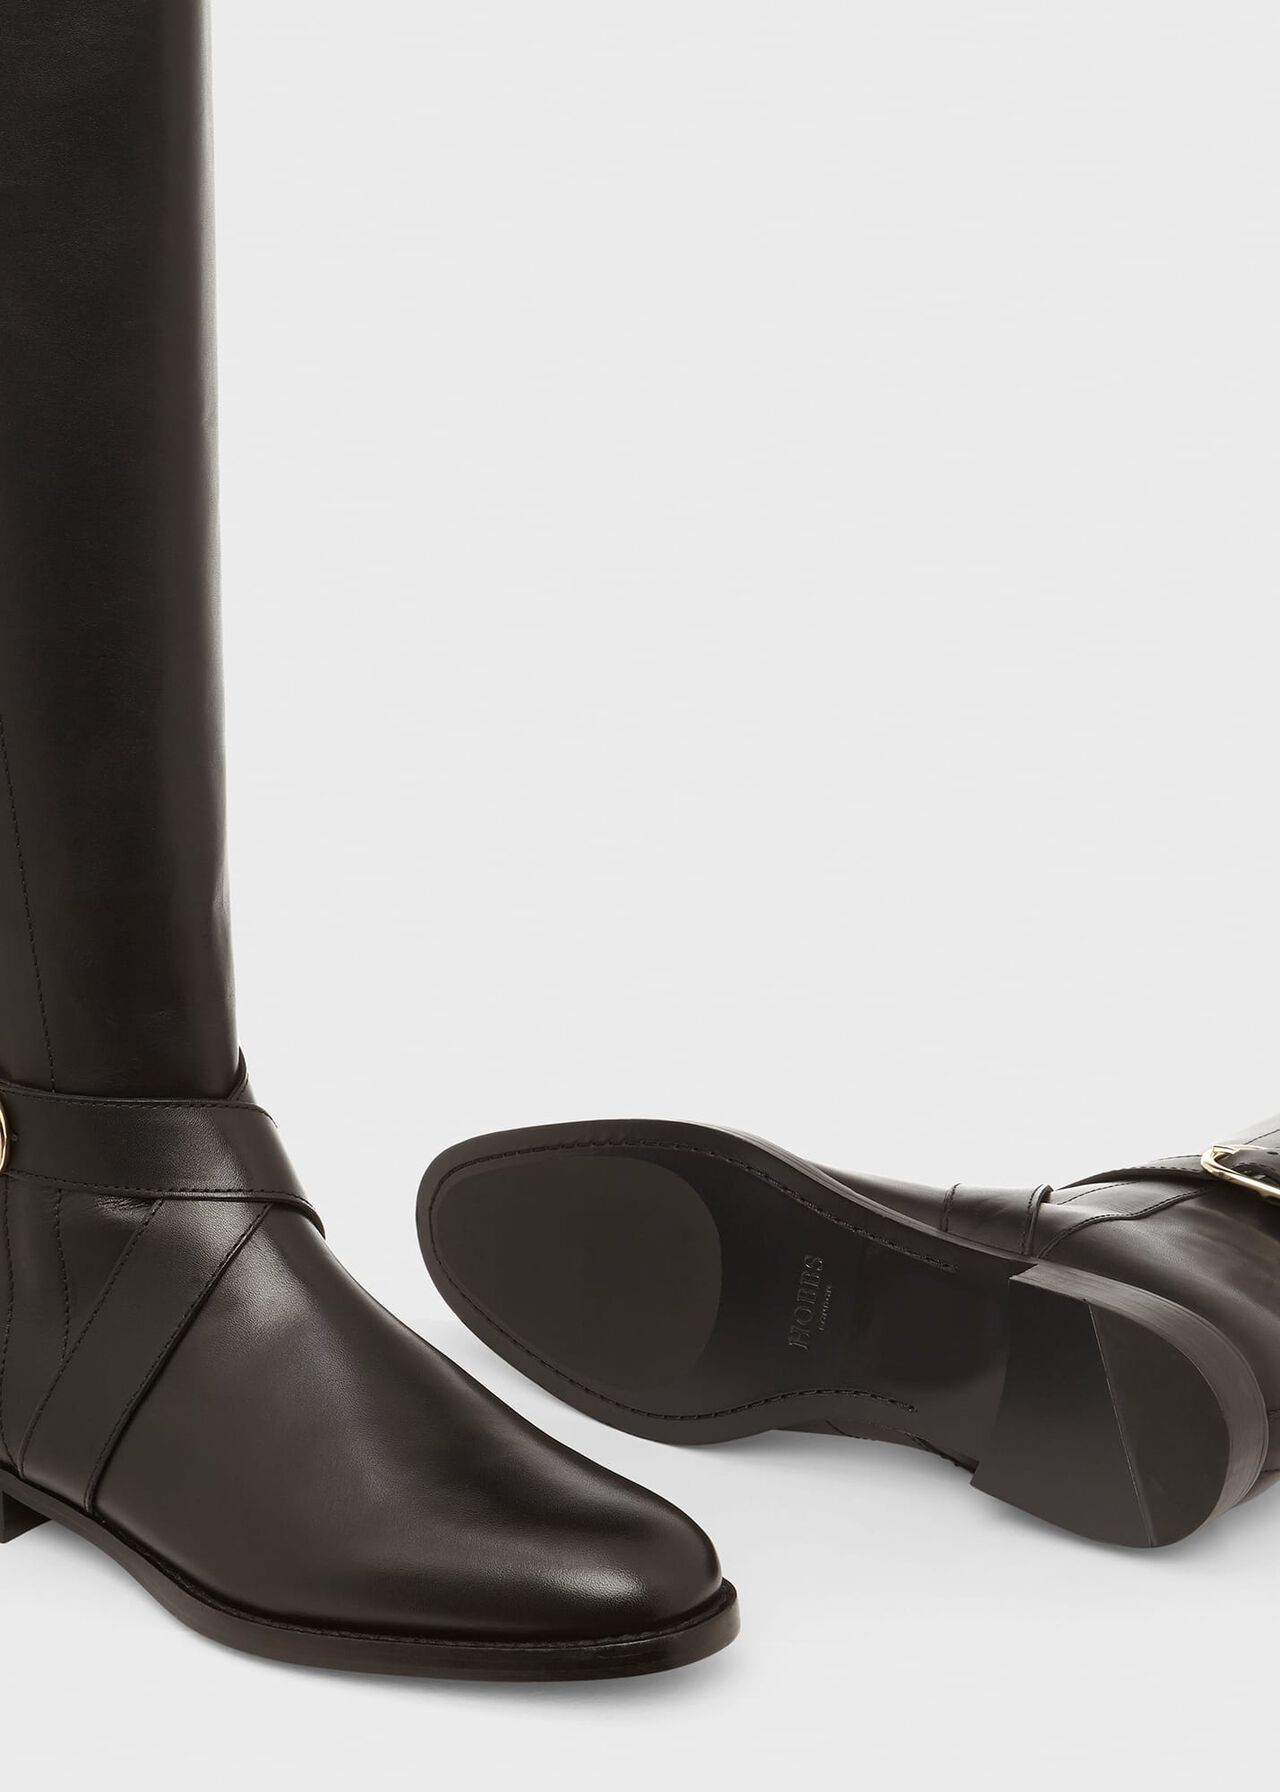 Lisette Leather Knee Boot, Black, hi-res